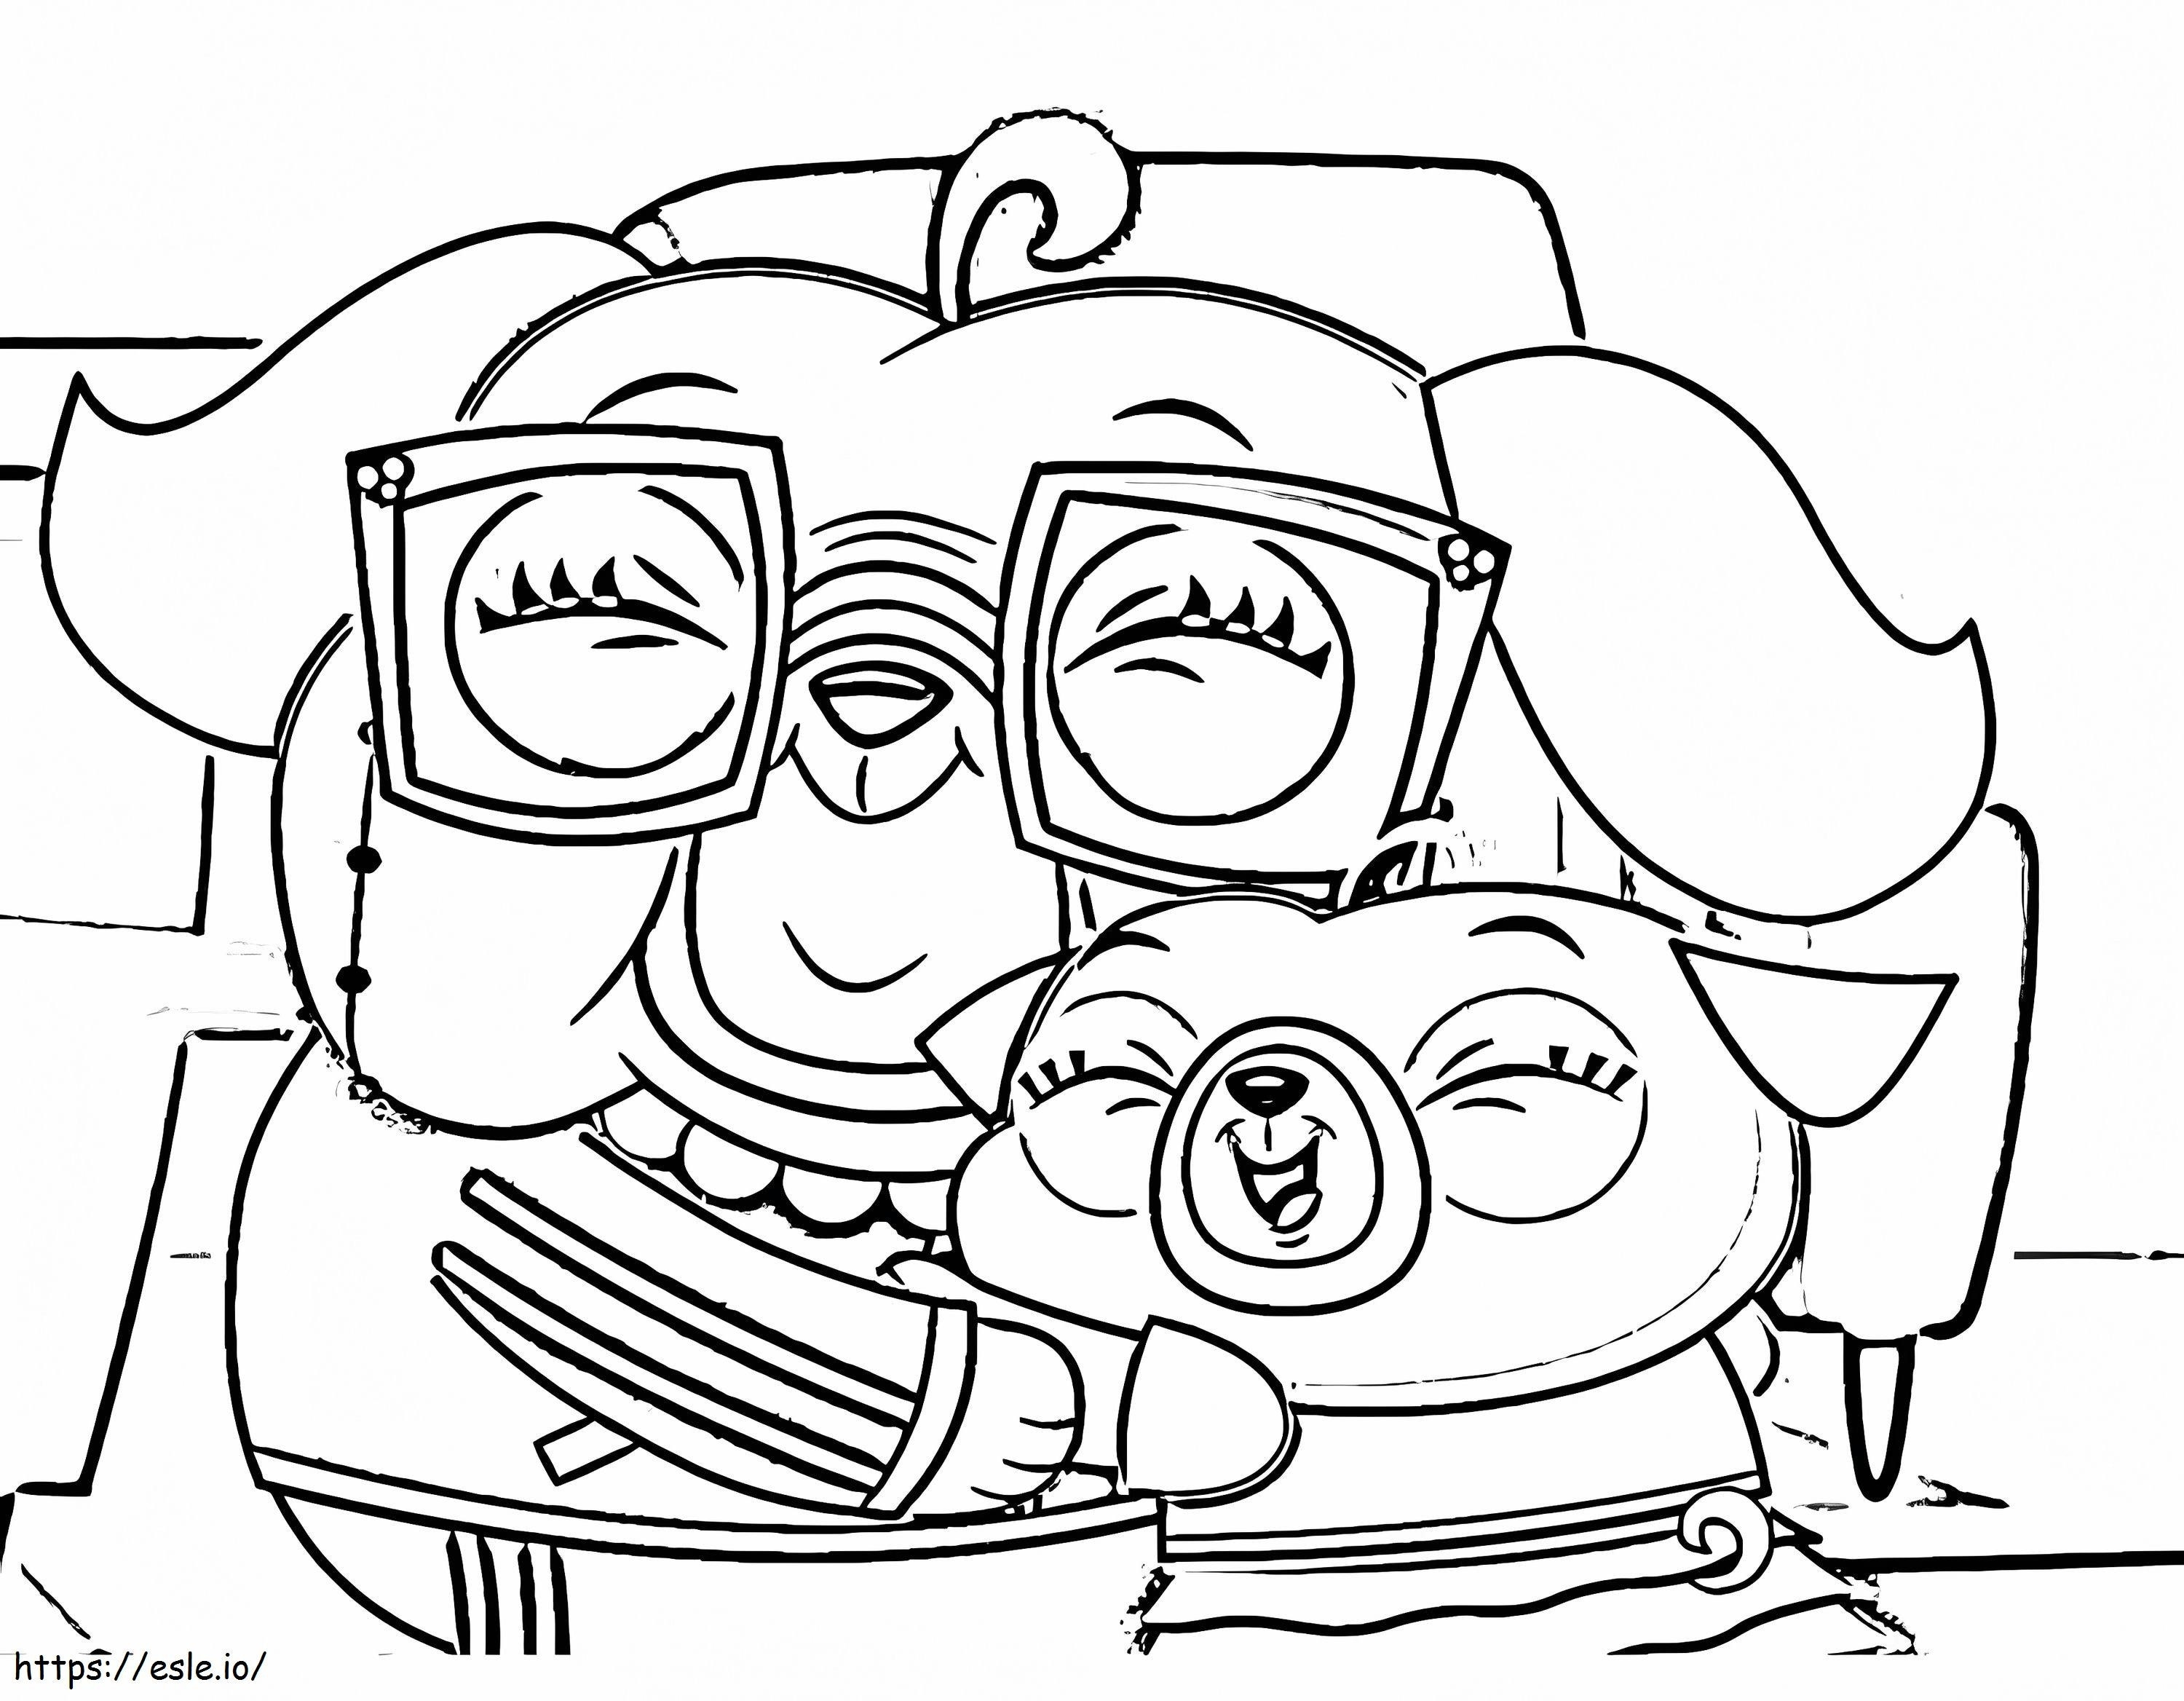 Chip And Grandma Pug coloring page